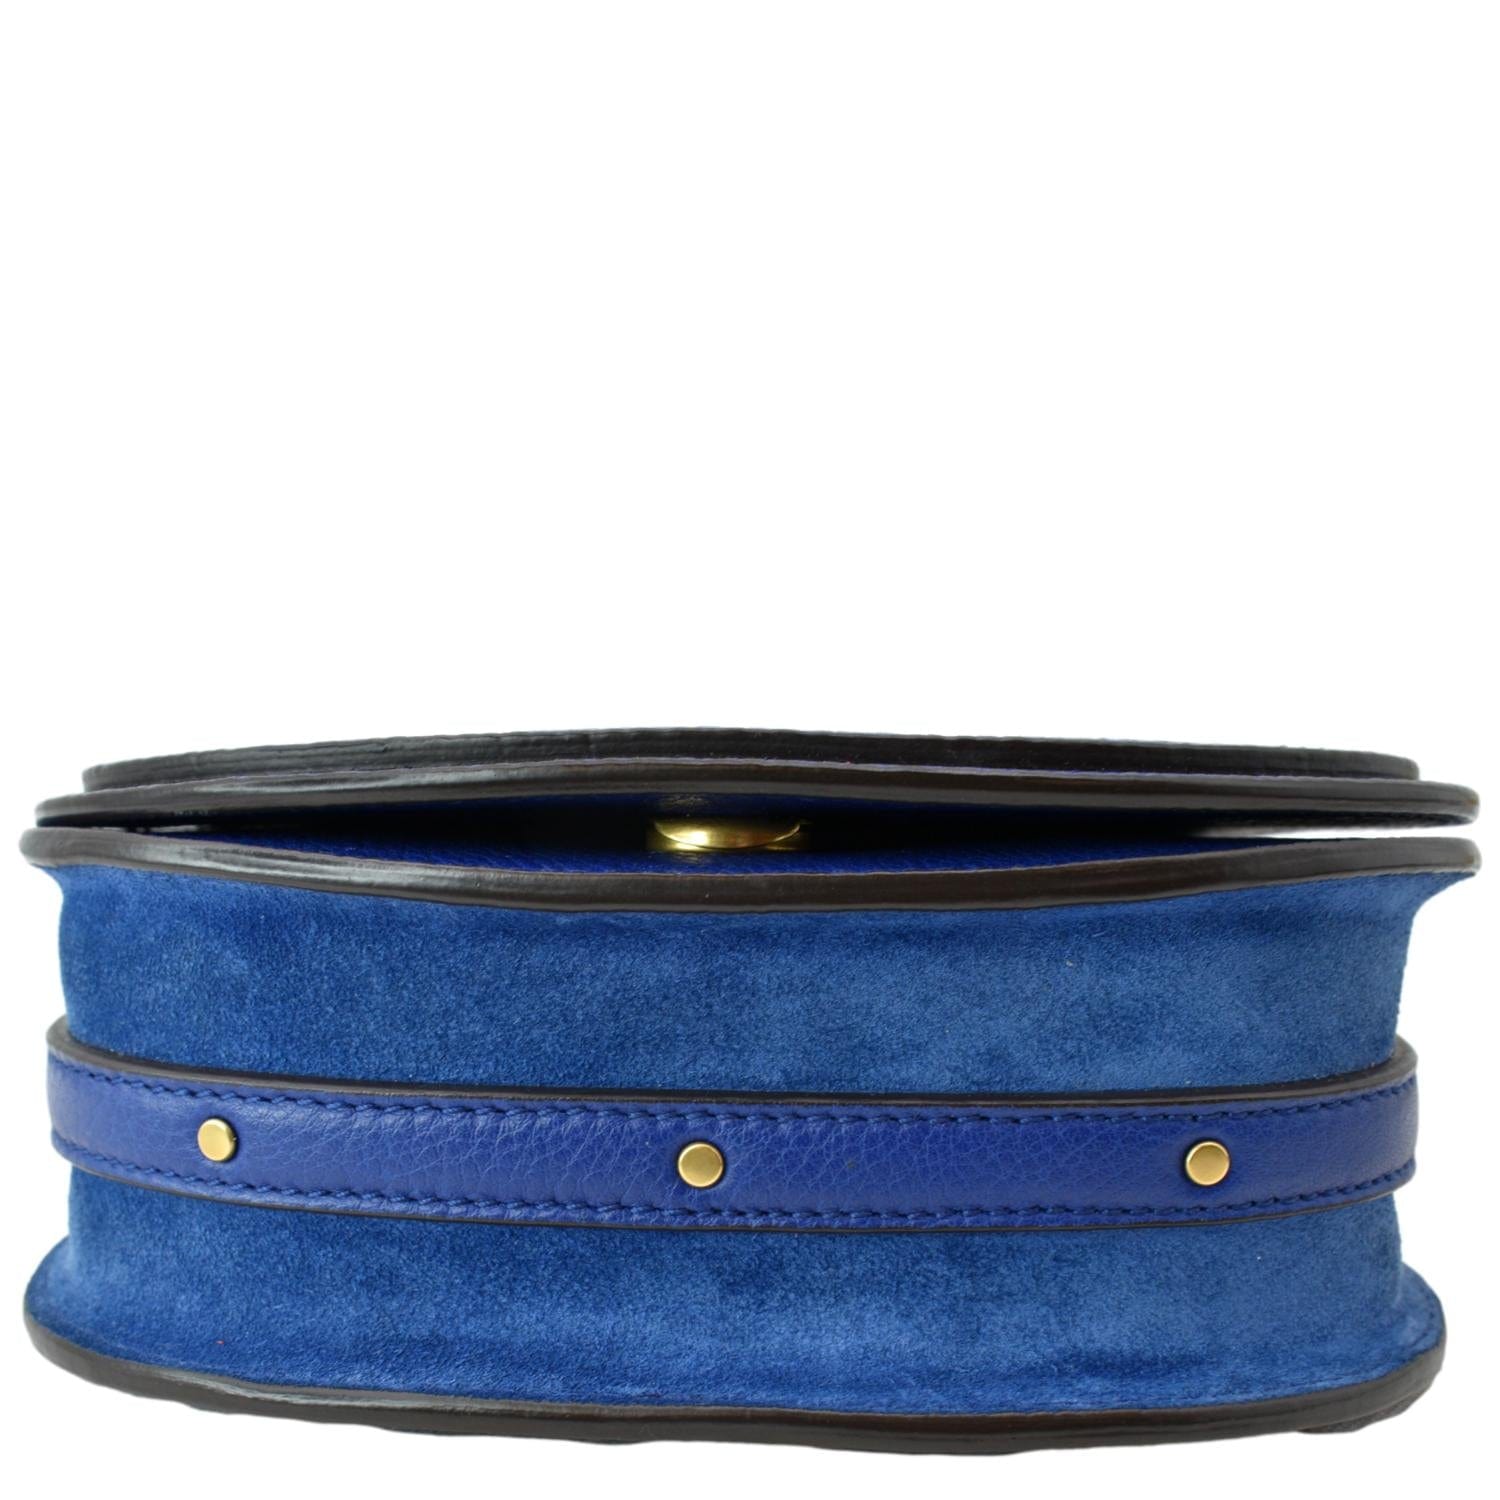 Chloé Nile Bracelet Mini Textured Leather Shoulder Bag, $1,490